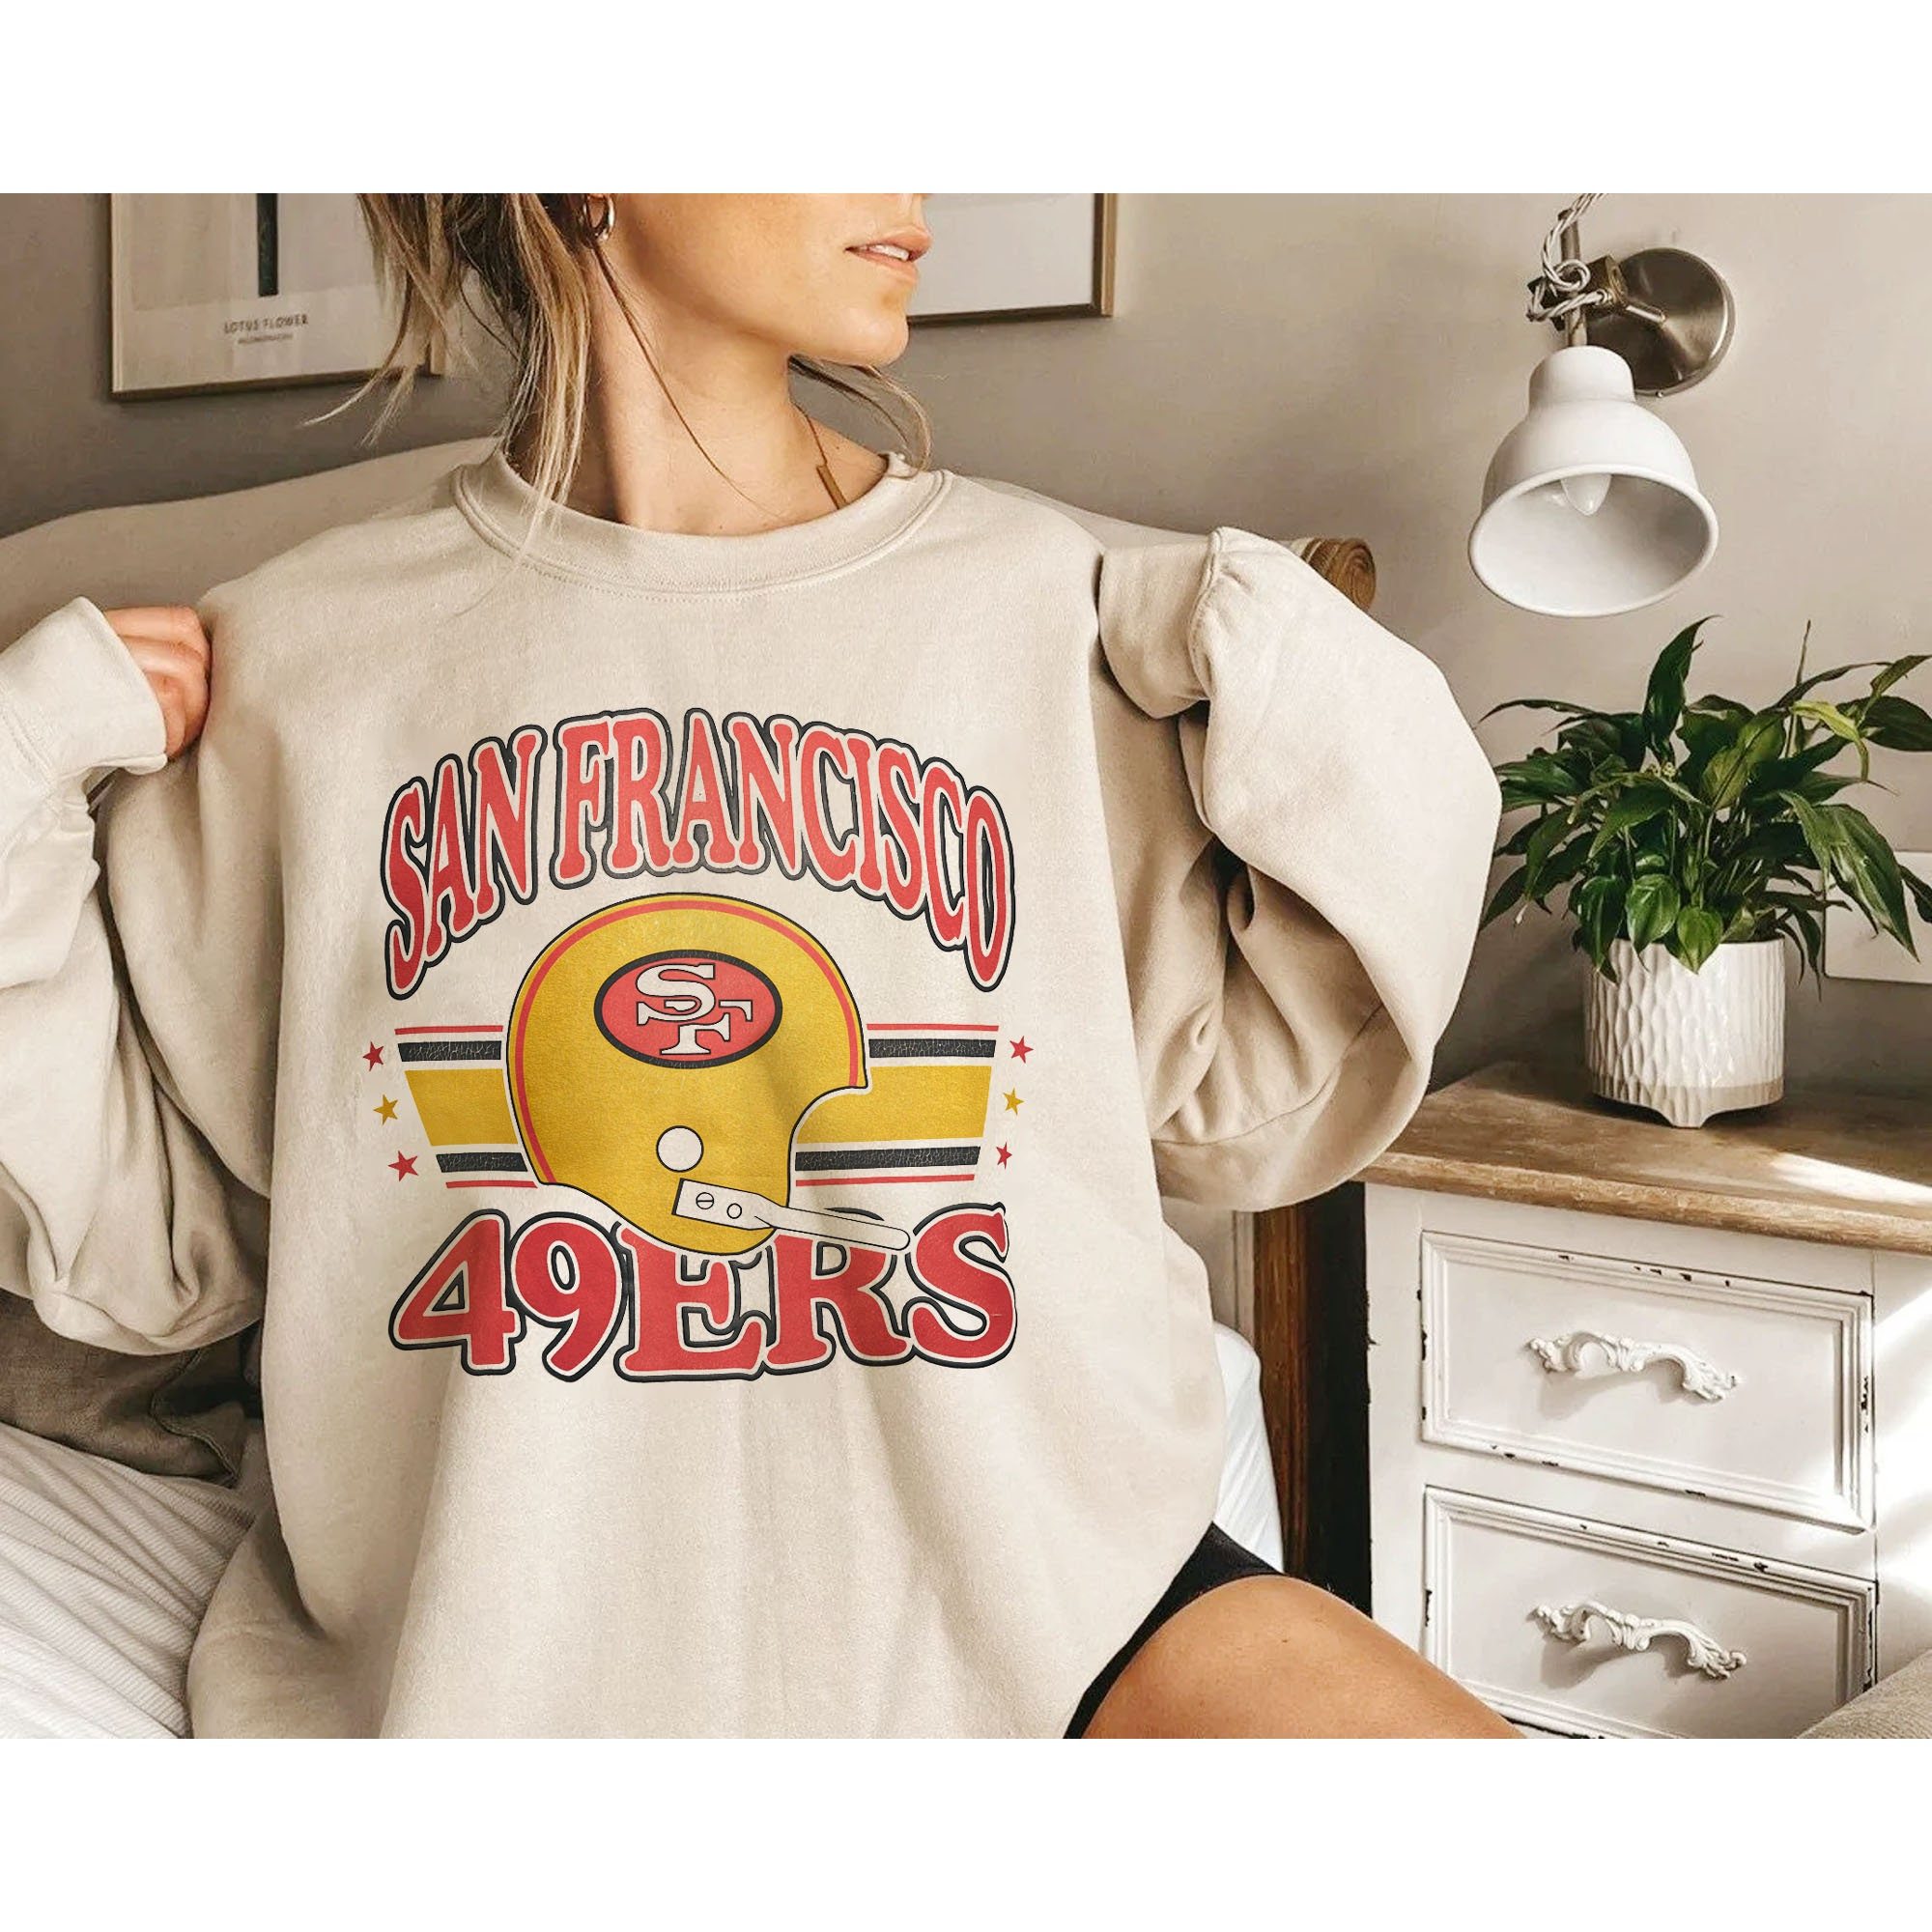 San Francisco Football Vintage Crewneck Sweatshirt